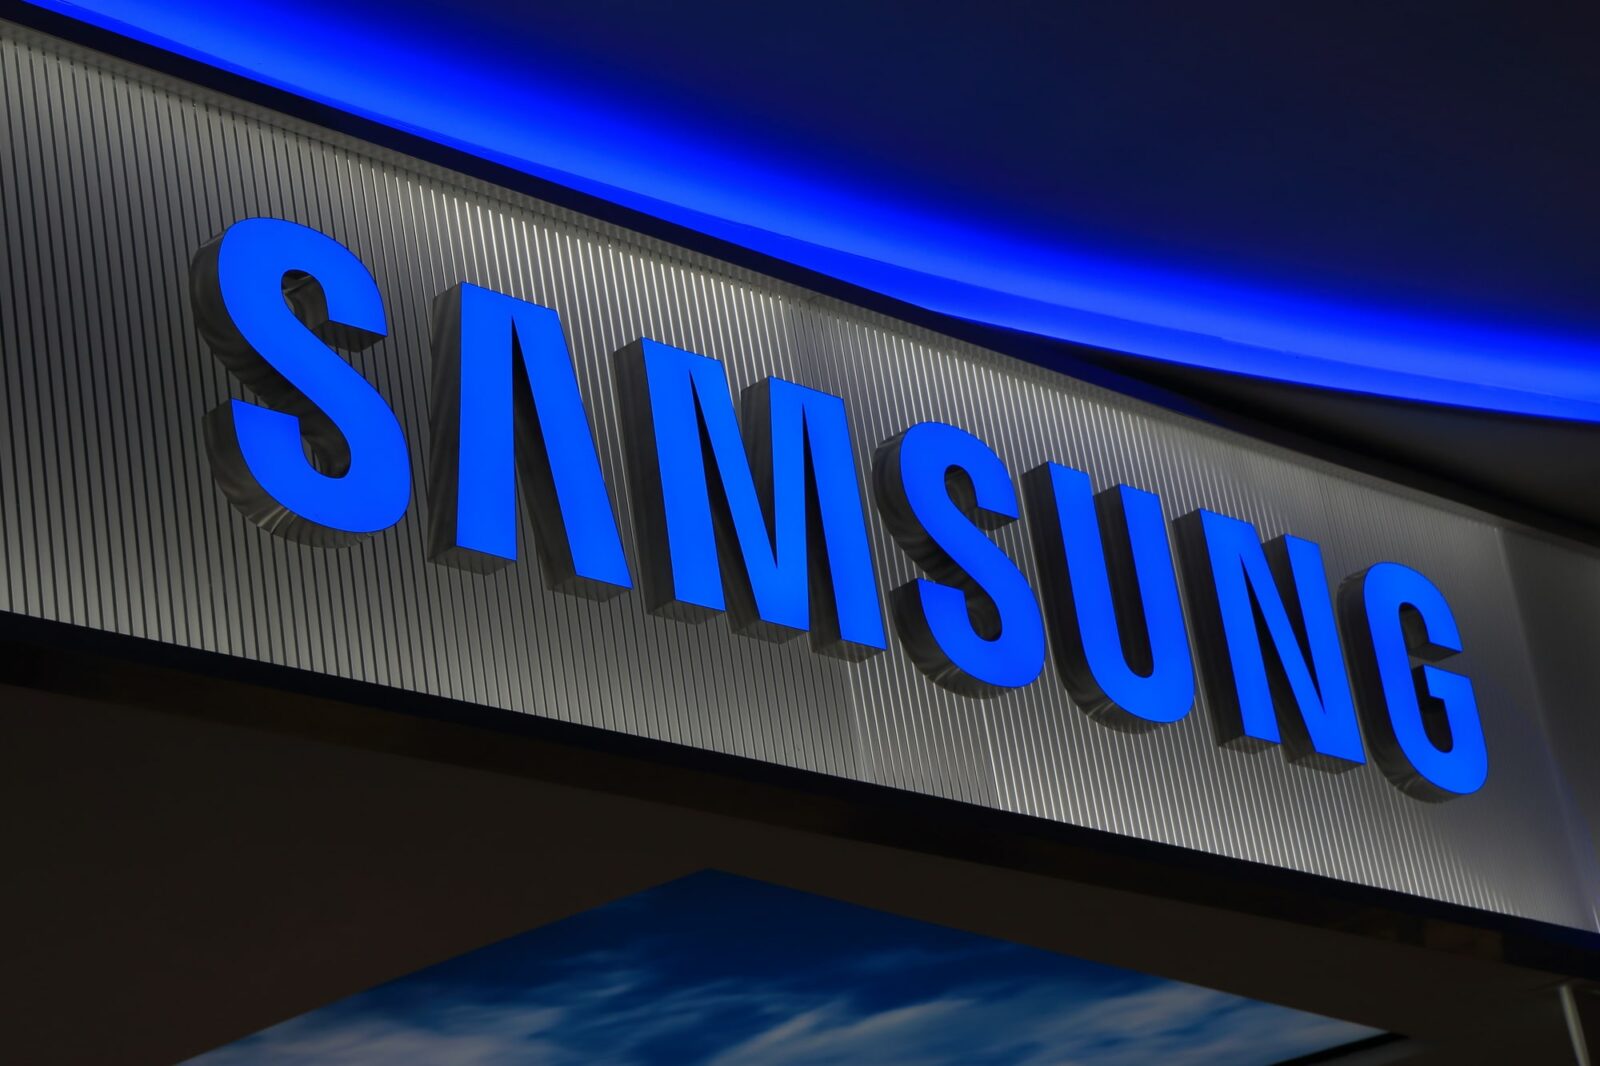 Samsung lancia Listen Tab per i dispositivi Galaxy thumbnail